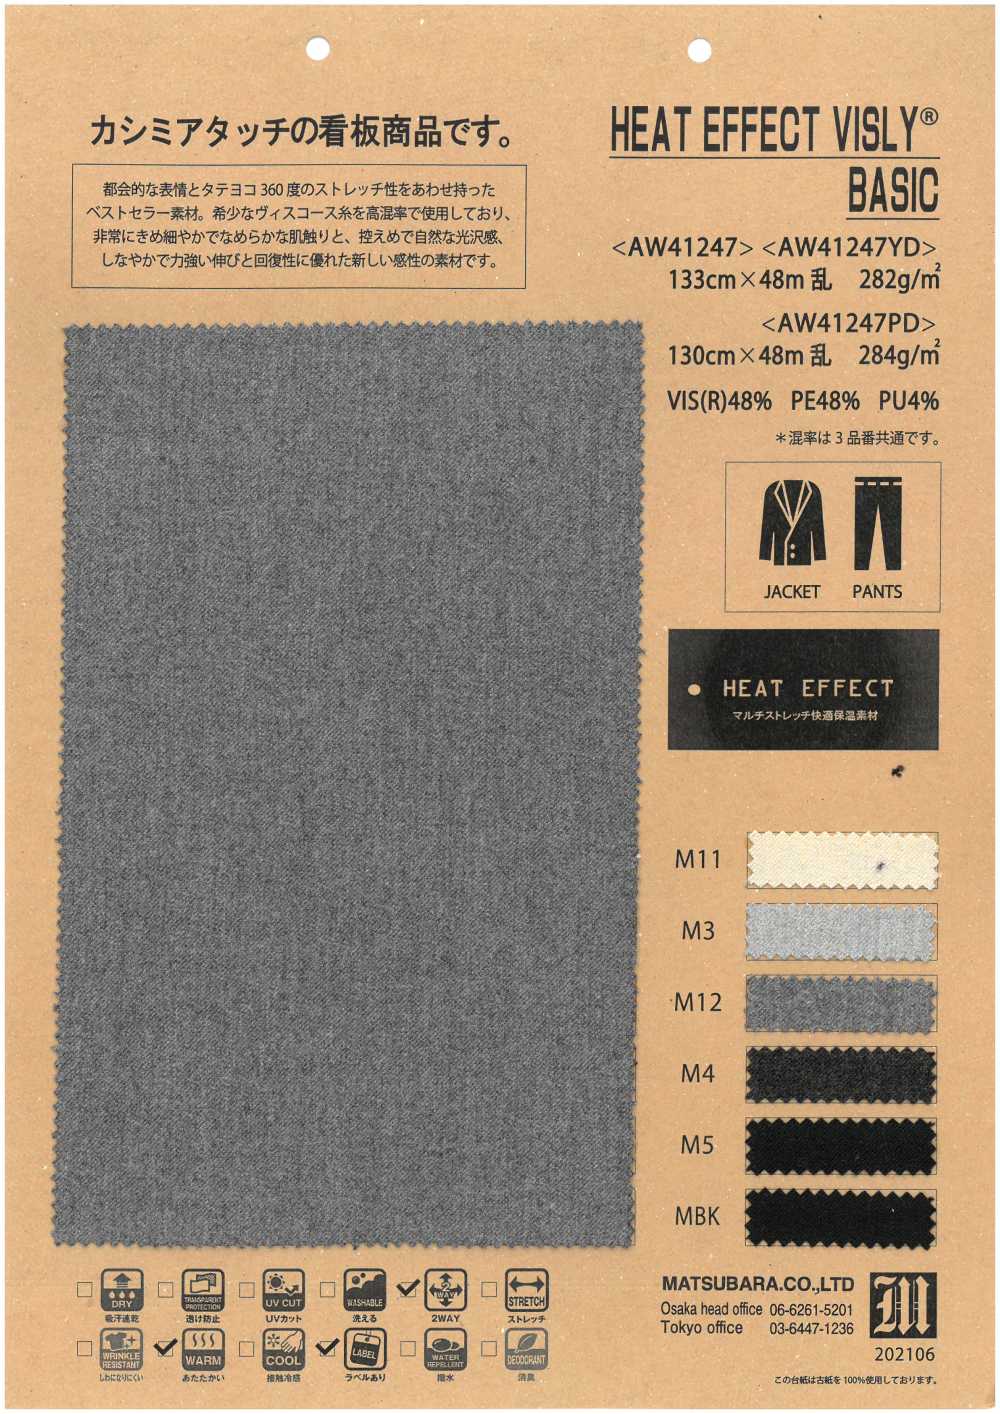 AW41247 Heat Effect Bisley Basic[Textile / Fabric] Matsubara